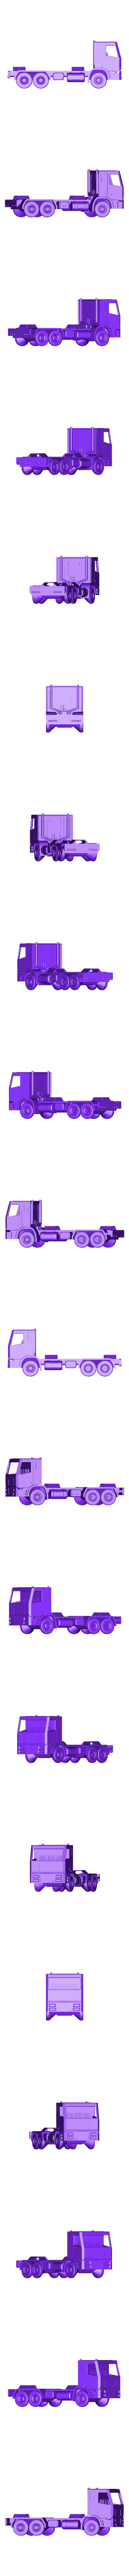 Truck_Base.stl Download STL file Print-in-Place Garbage Truck Module • 3D print object, budinavit